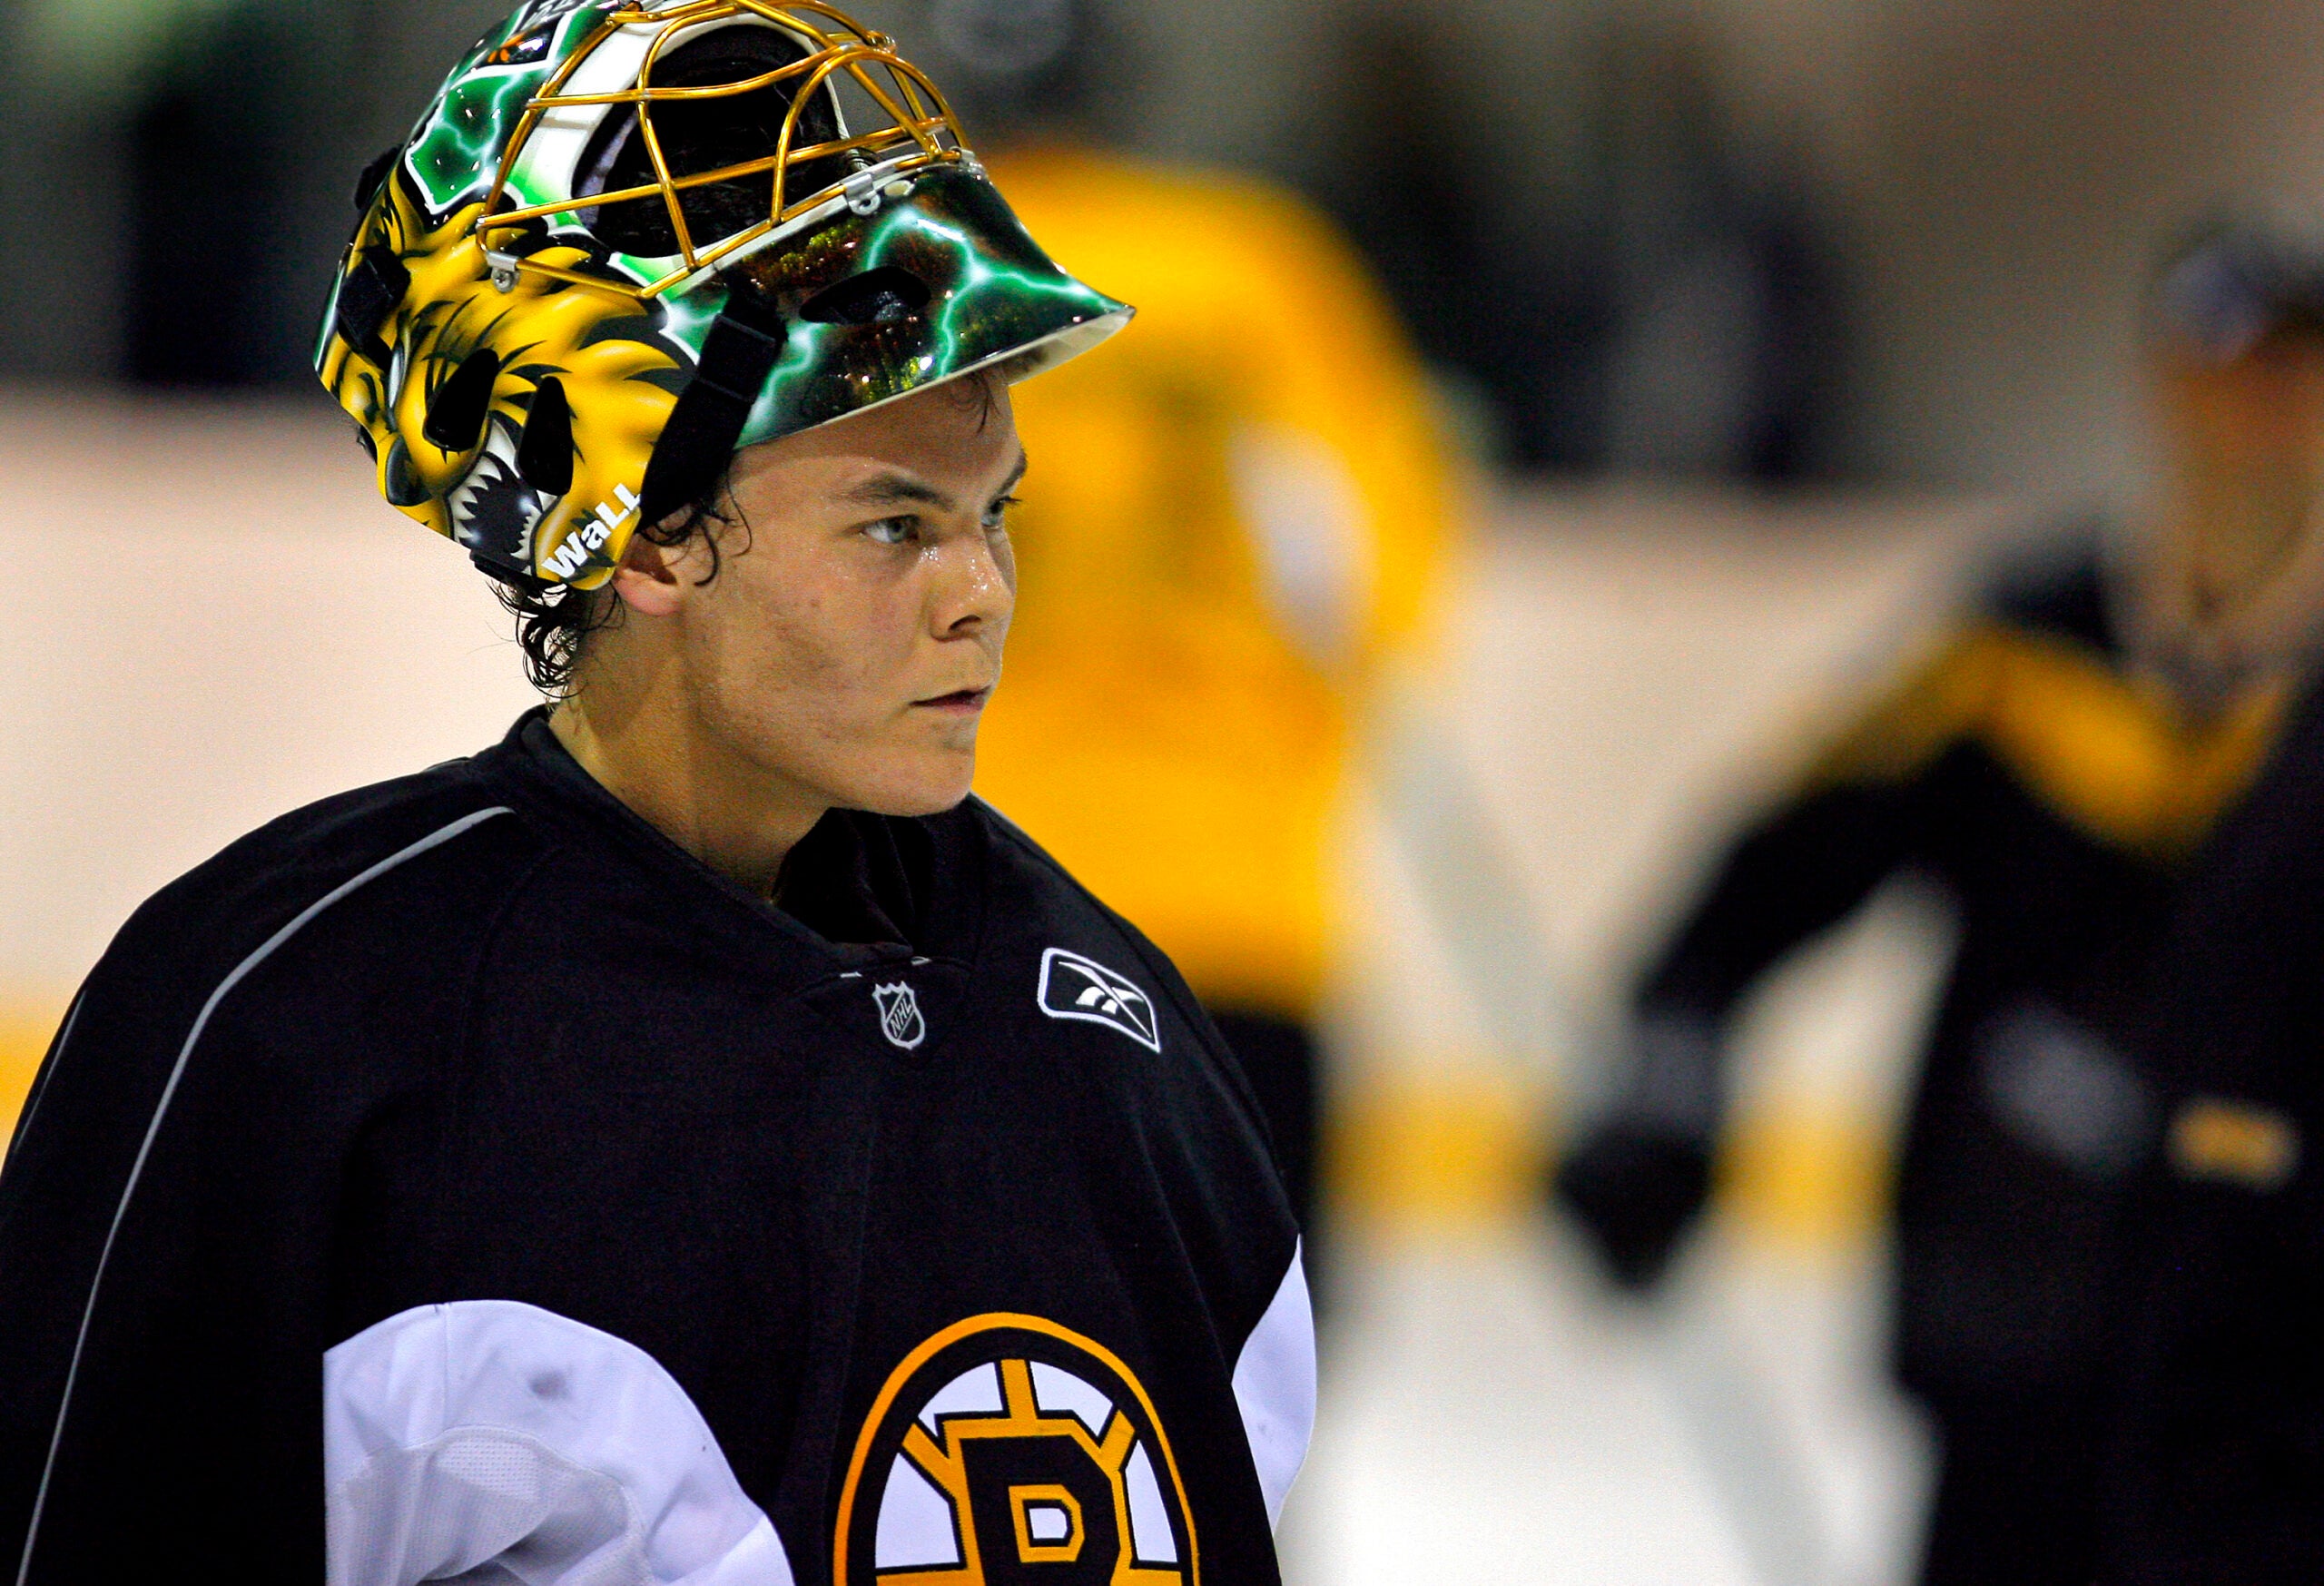 Islanders understand Bruins star Tuukka Rask's decision to opt out